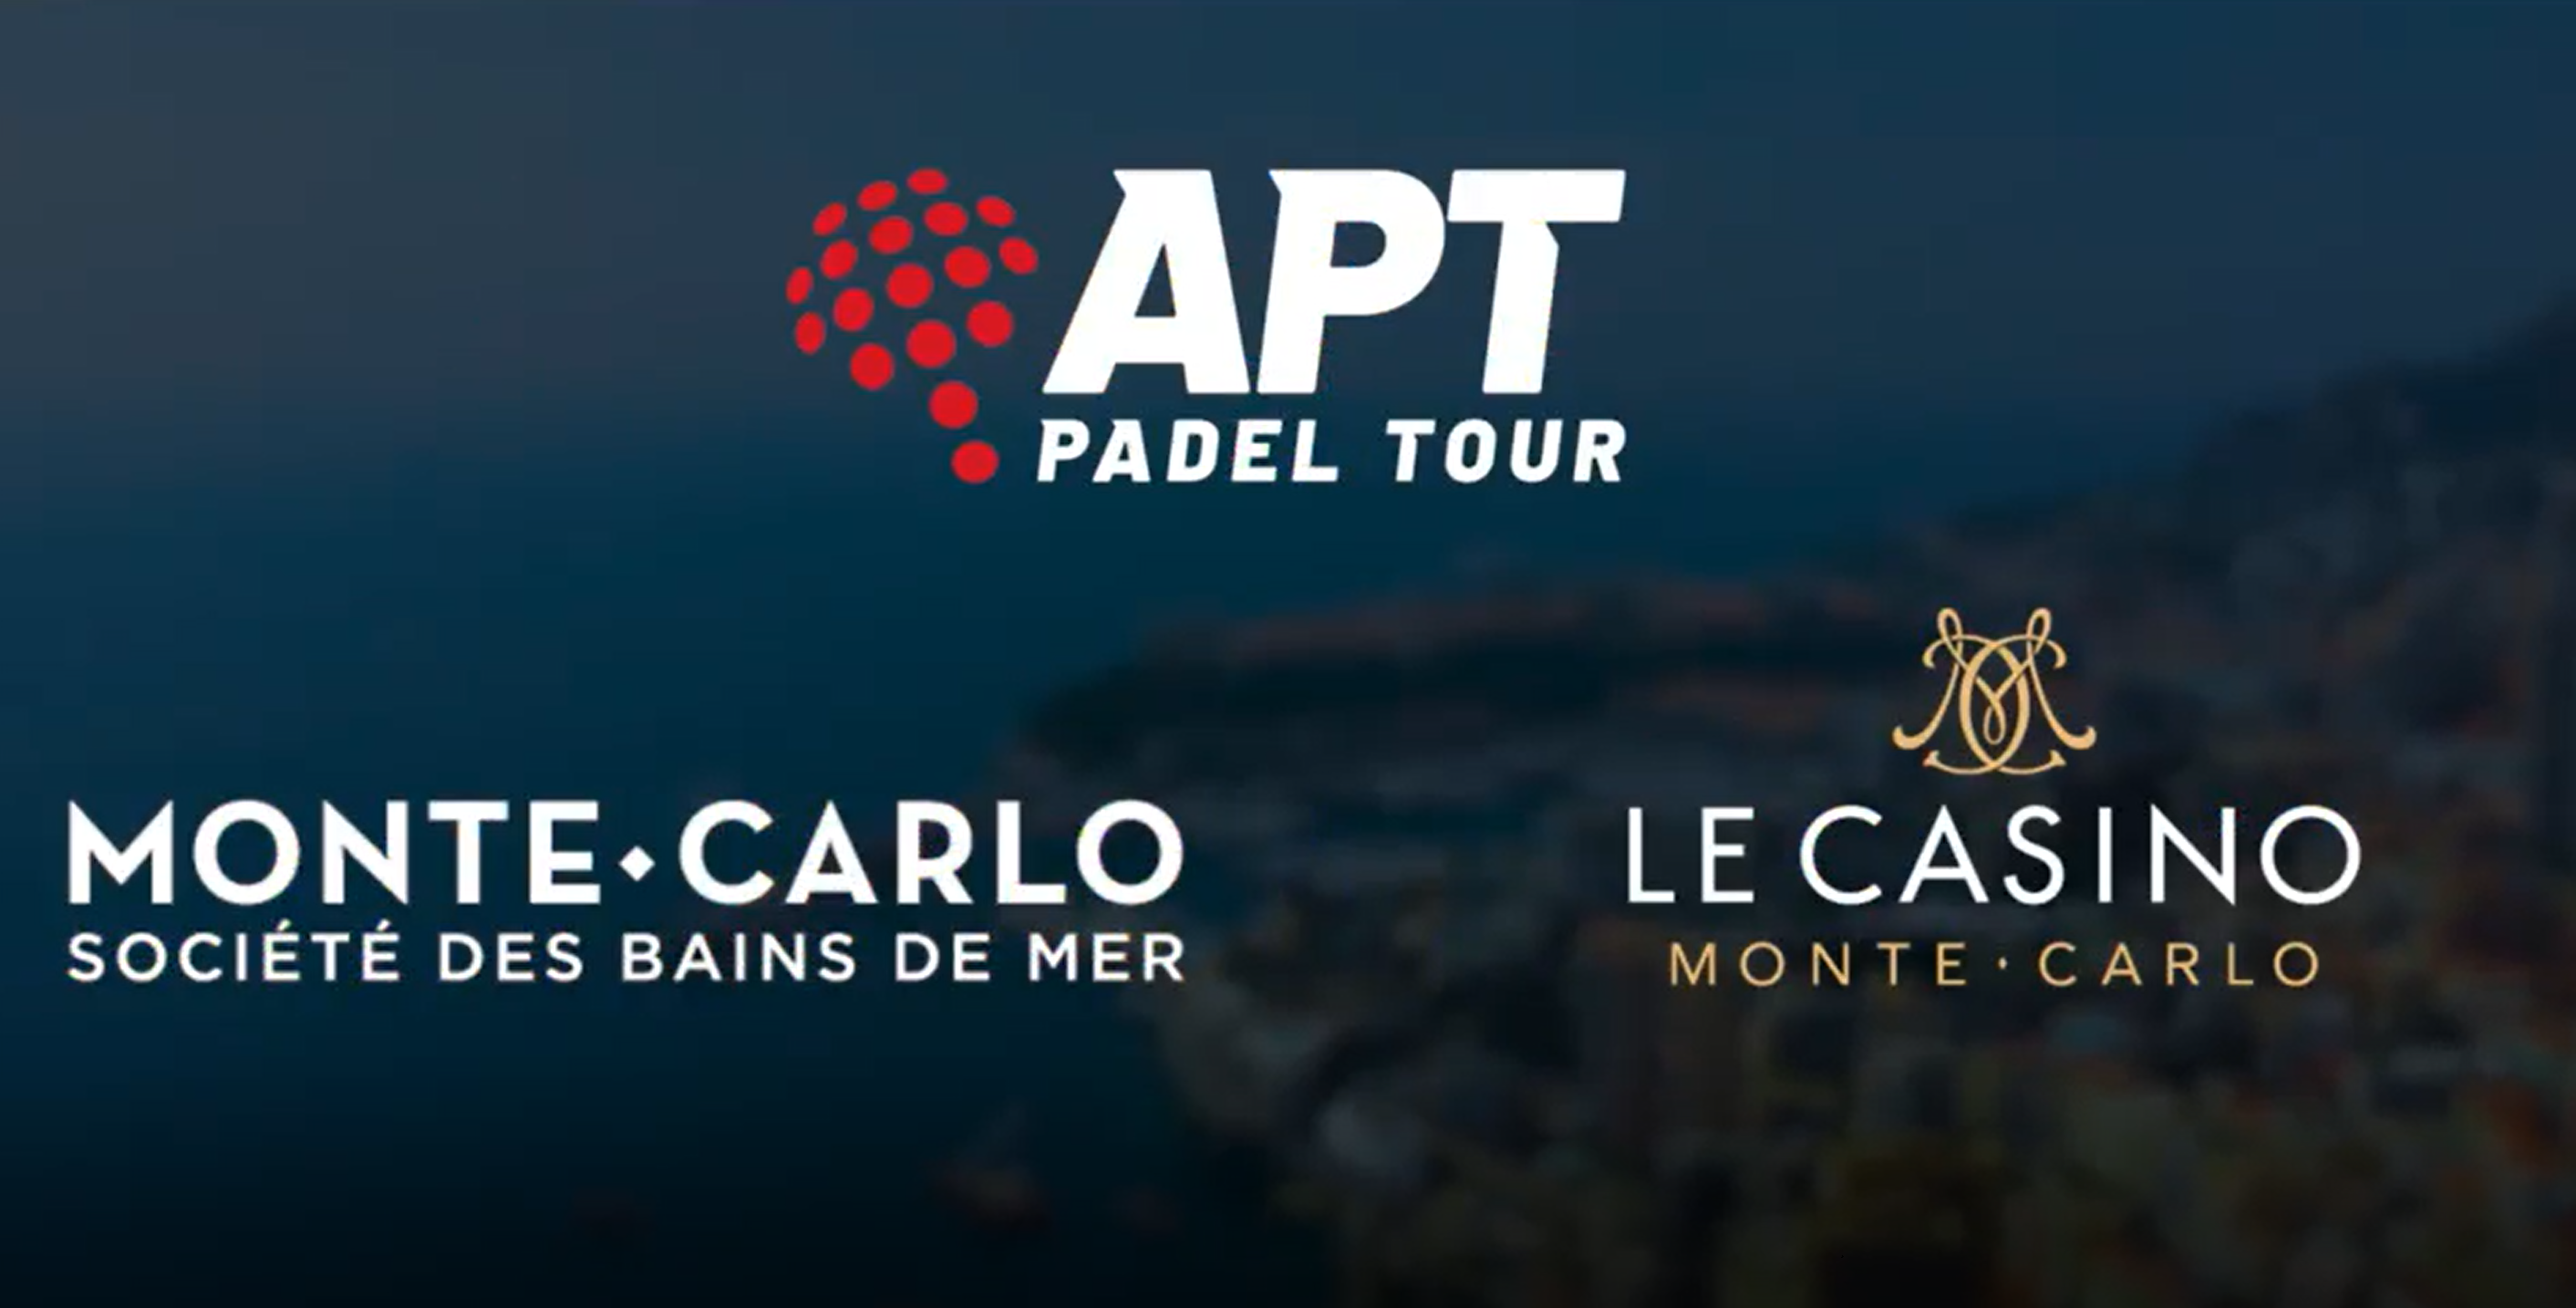 APT Padel Tour Monaco: Es wird heiß!